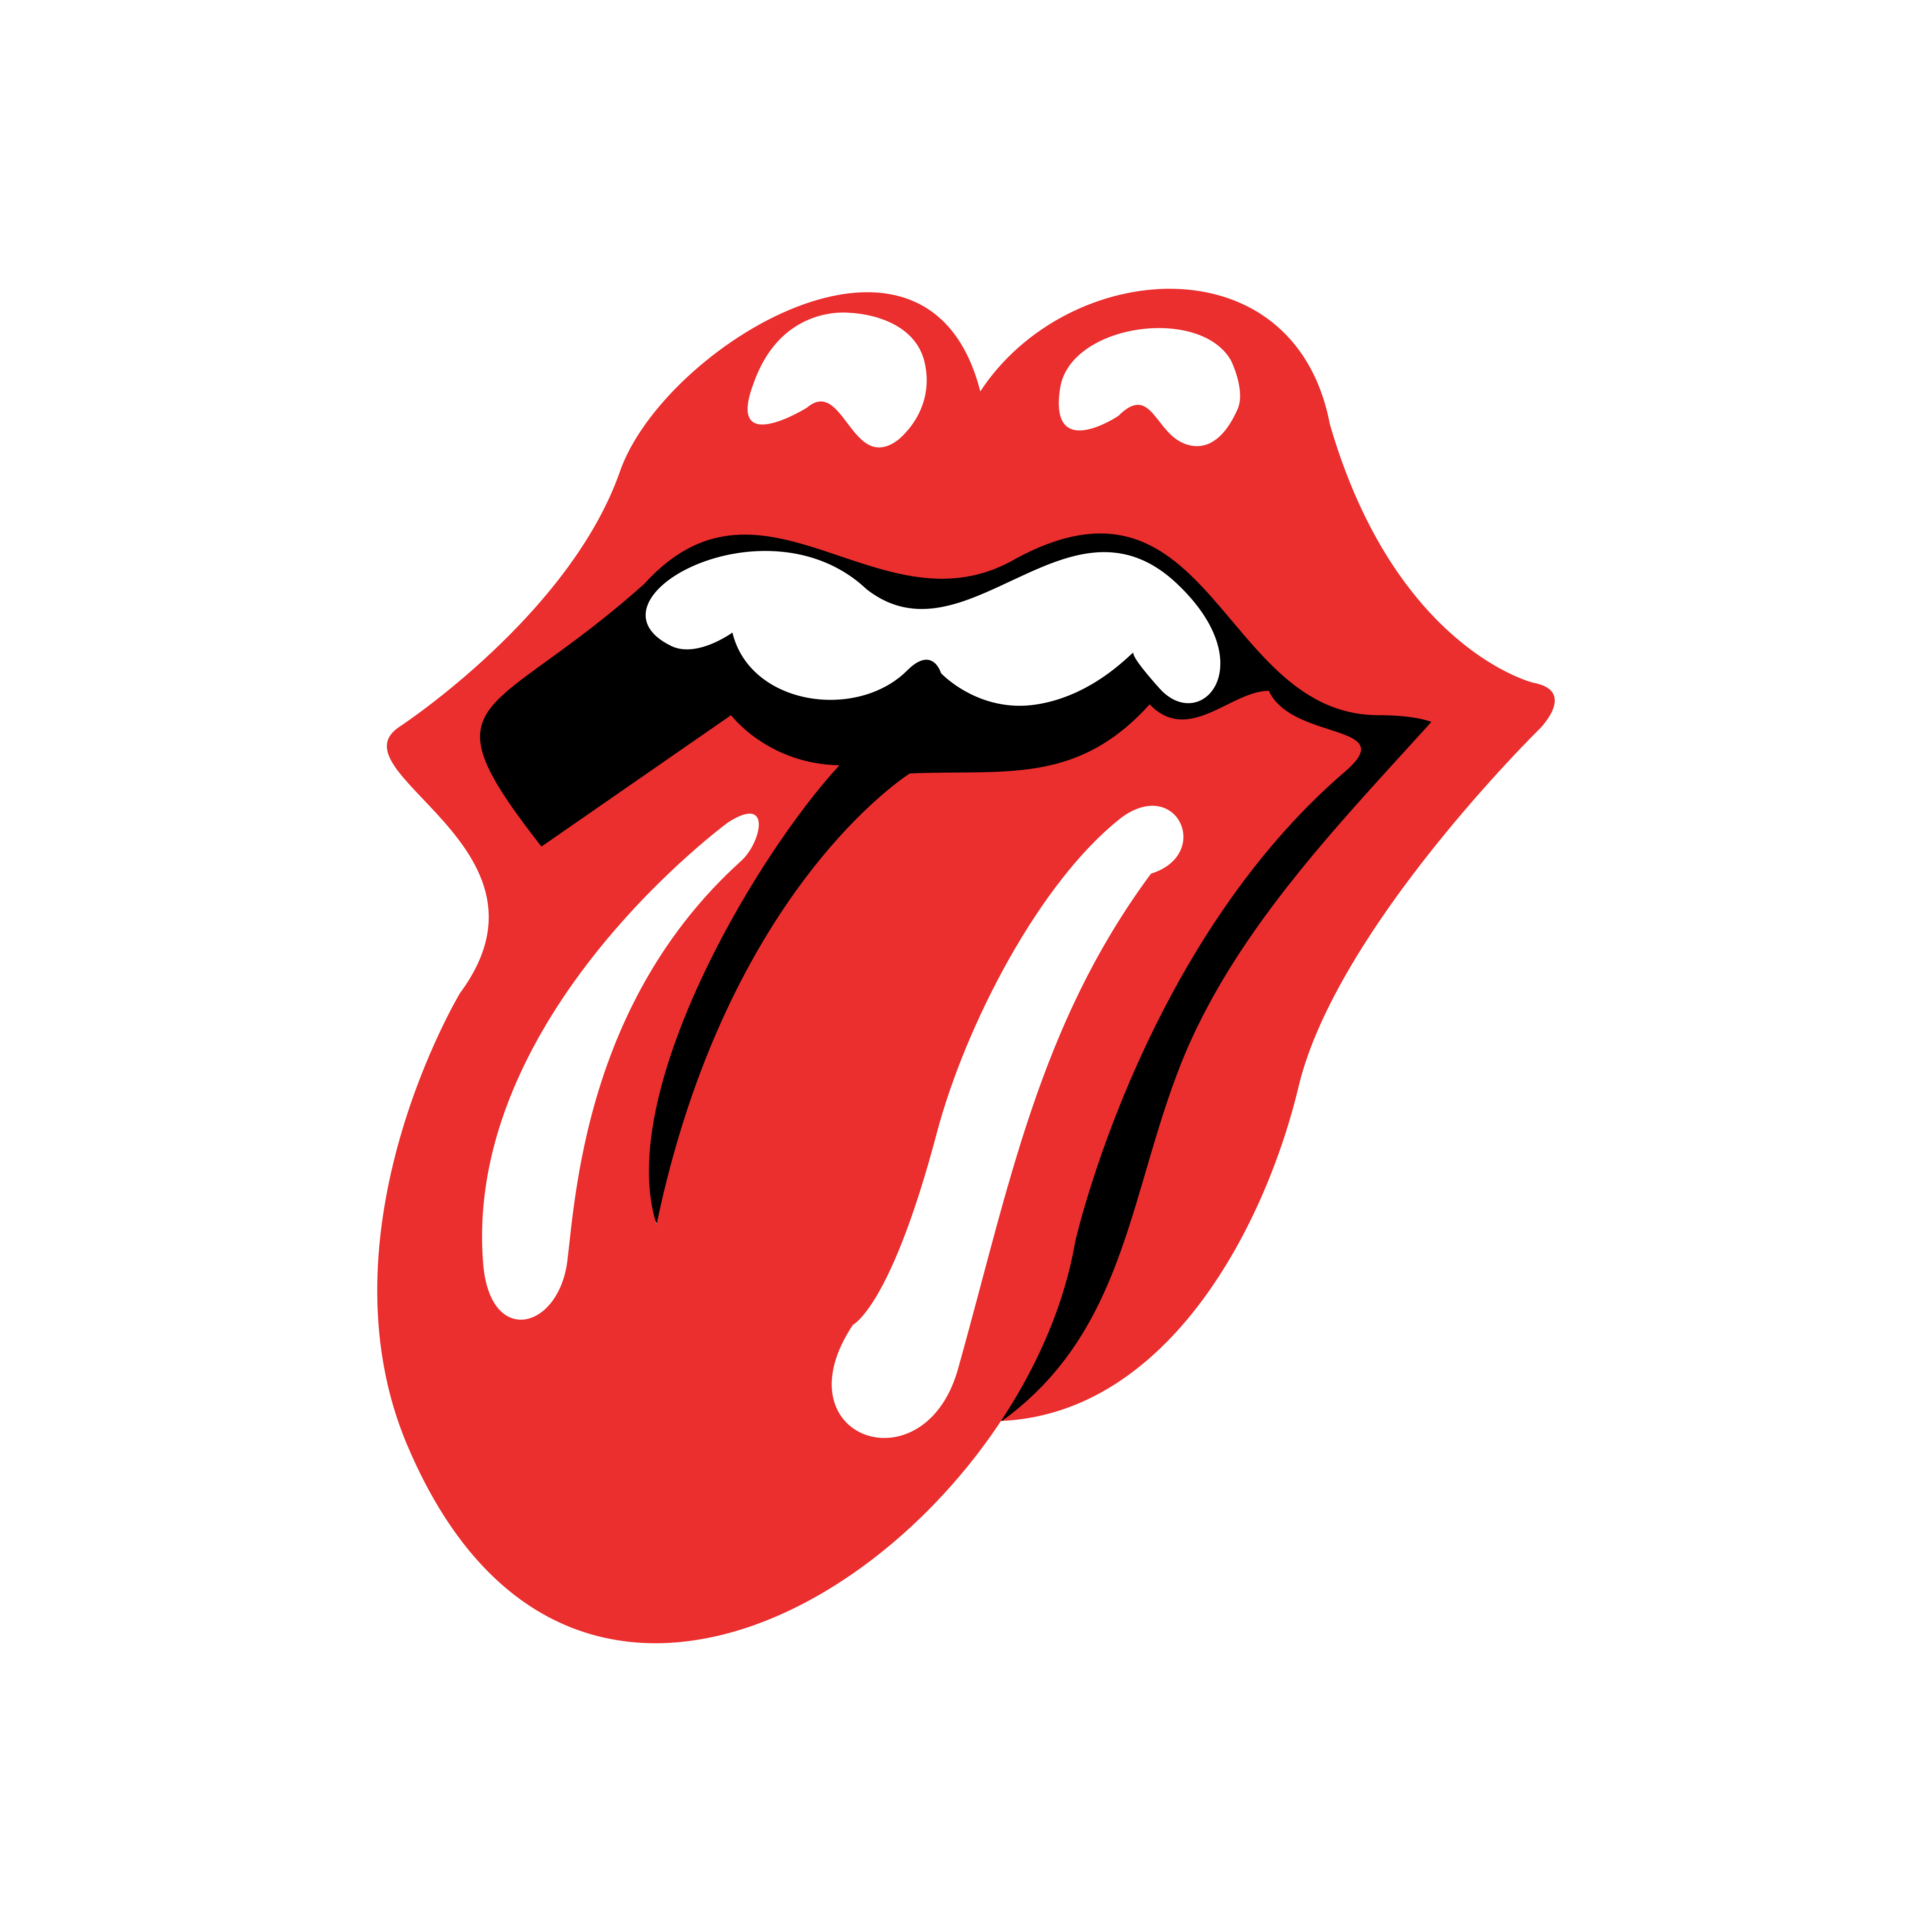 rolling stones logo 0 - The Rolling Stones Logo